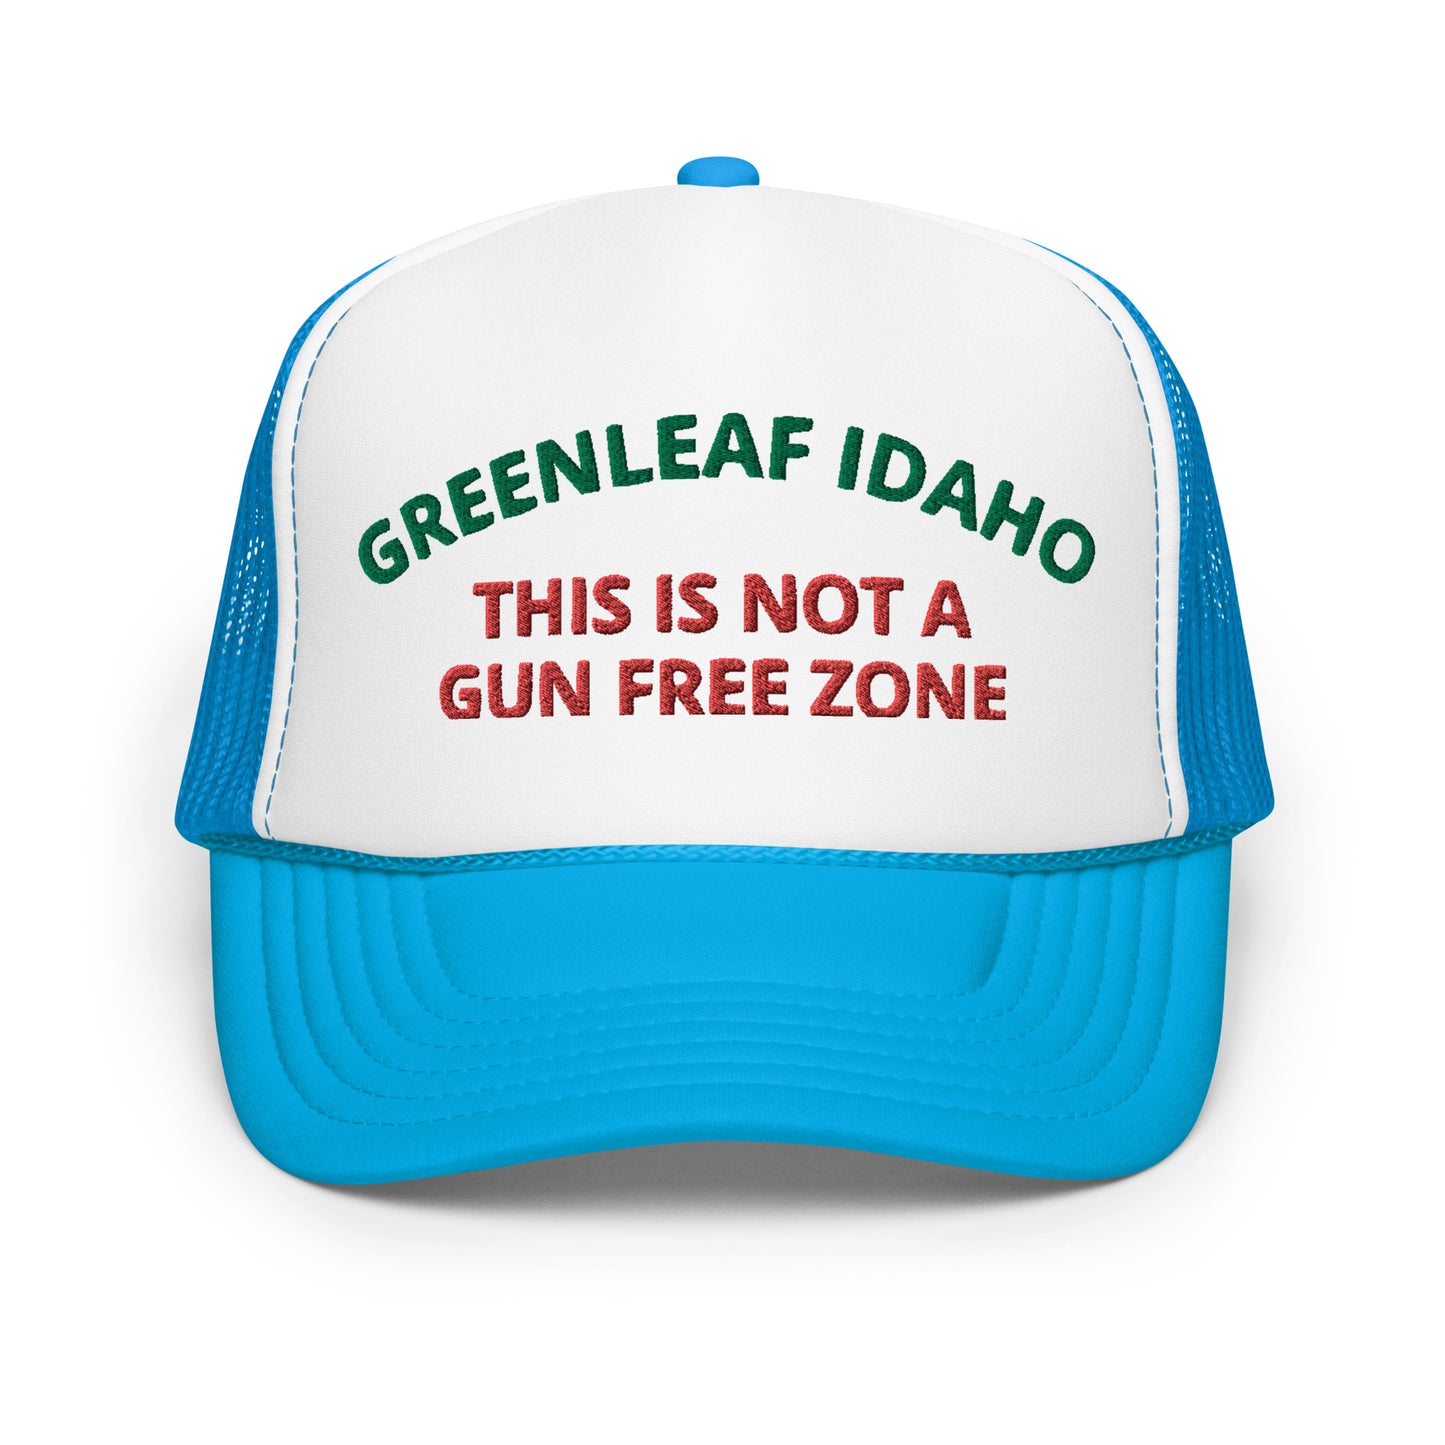 GREENLEAF IDAHO Foam trucker hat